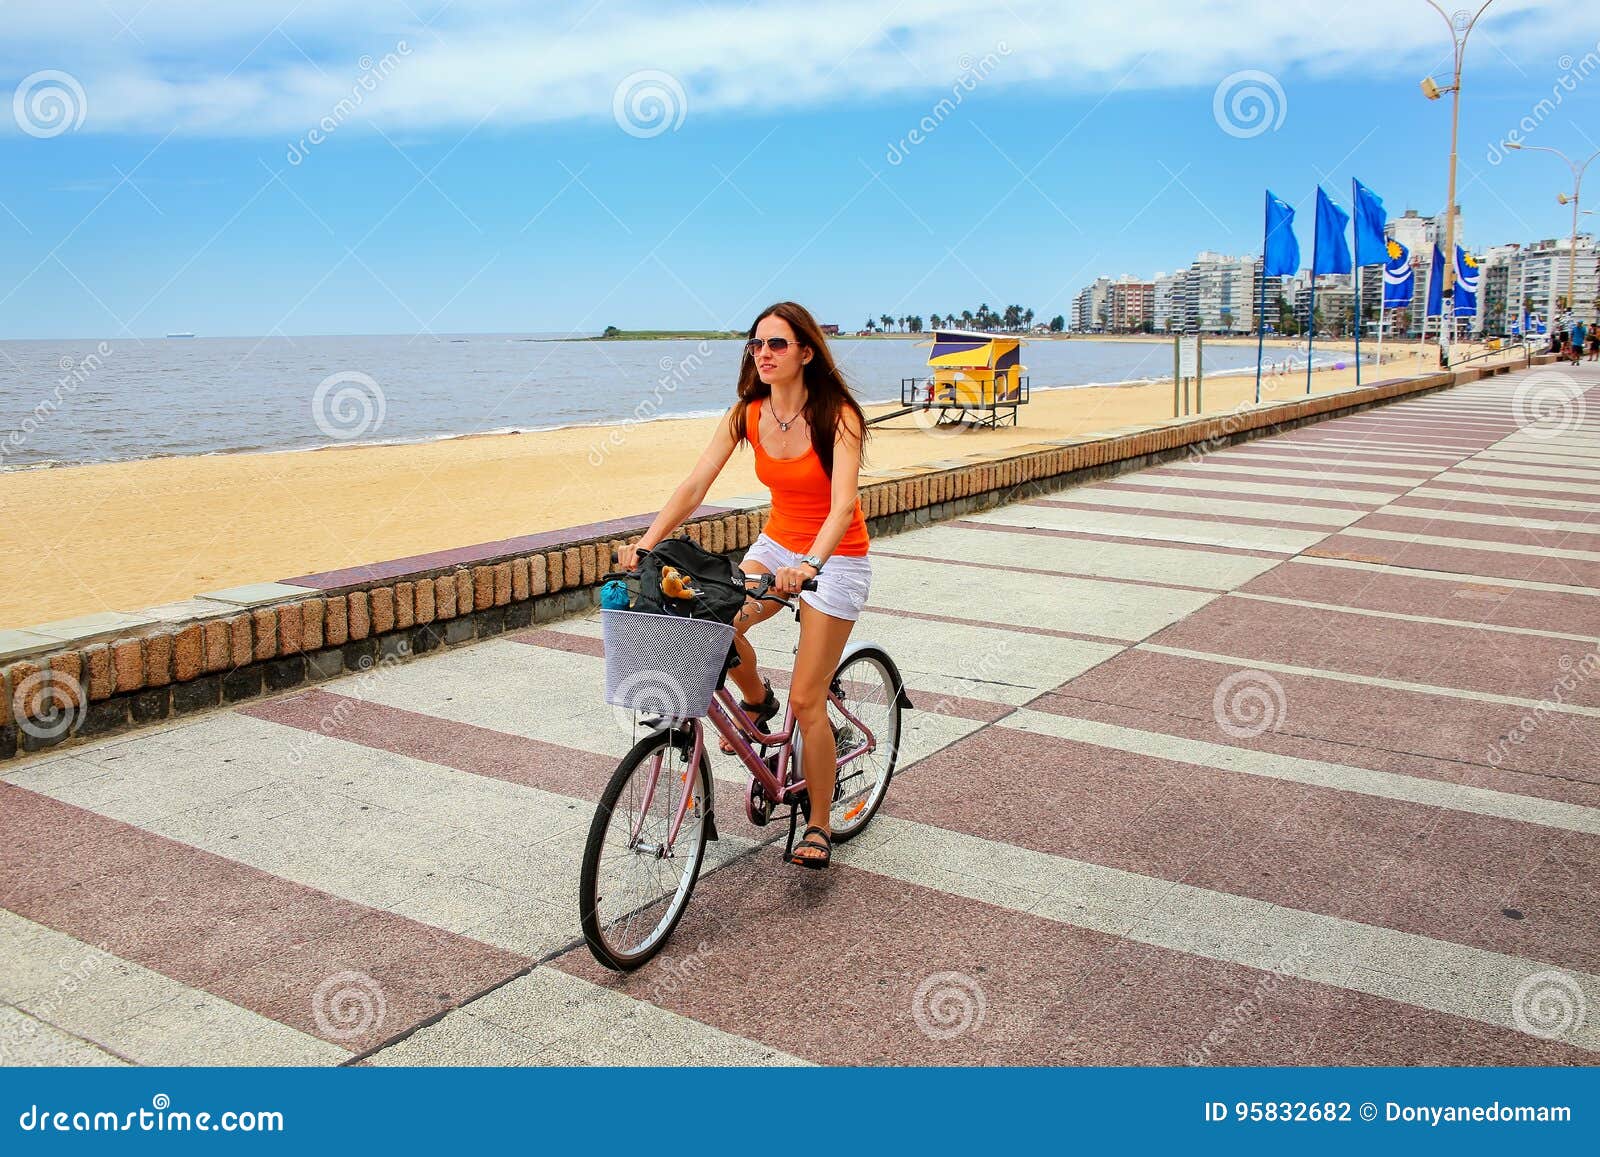 woman biking on the boulevard along pocitos beach in montevideo, uruguay.